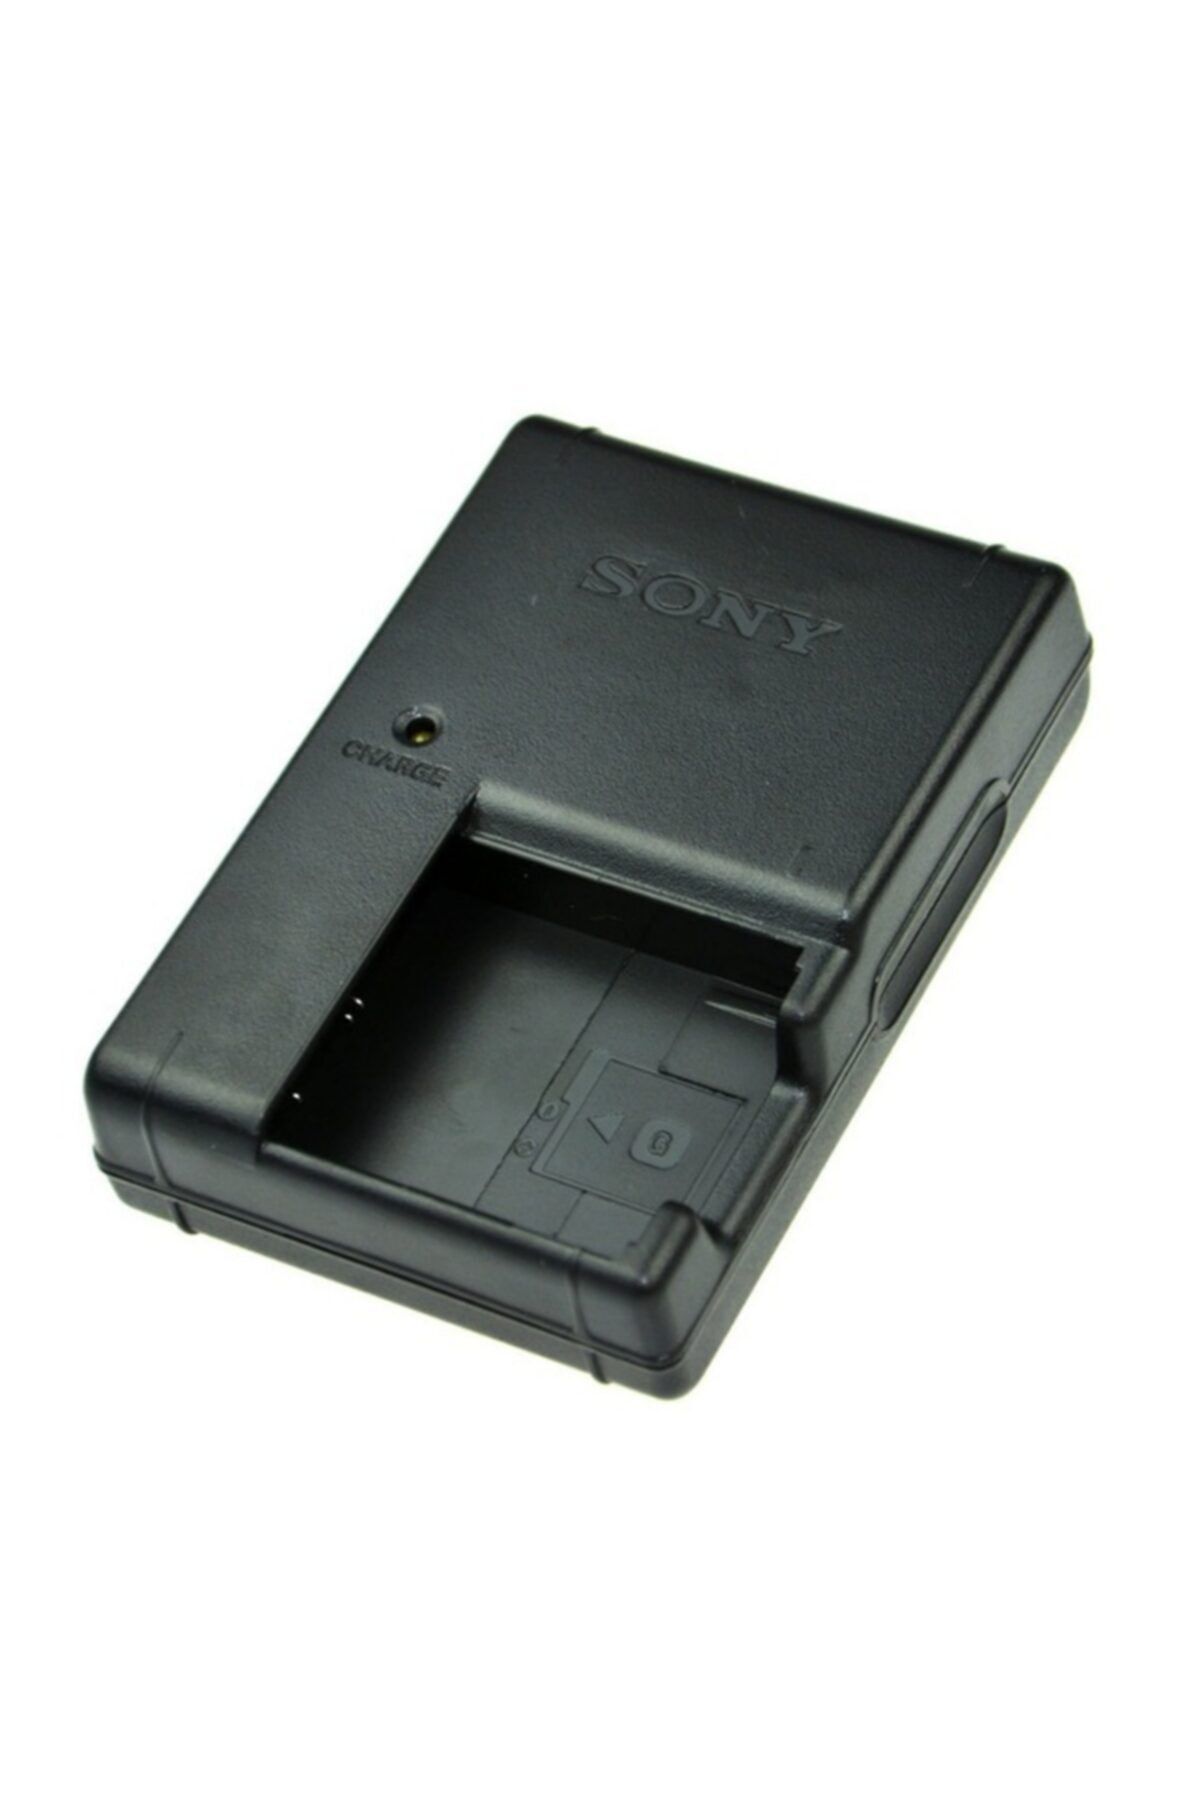 Sony Bc-csd Batarya Şarj Cihazı Aleti Np-bd1 Ft1 Fd1 Fe1 Fr1